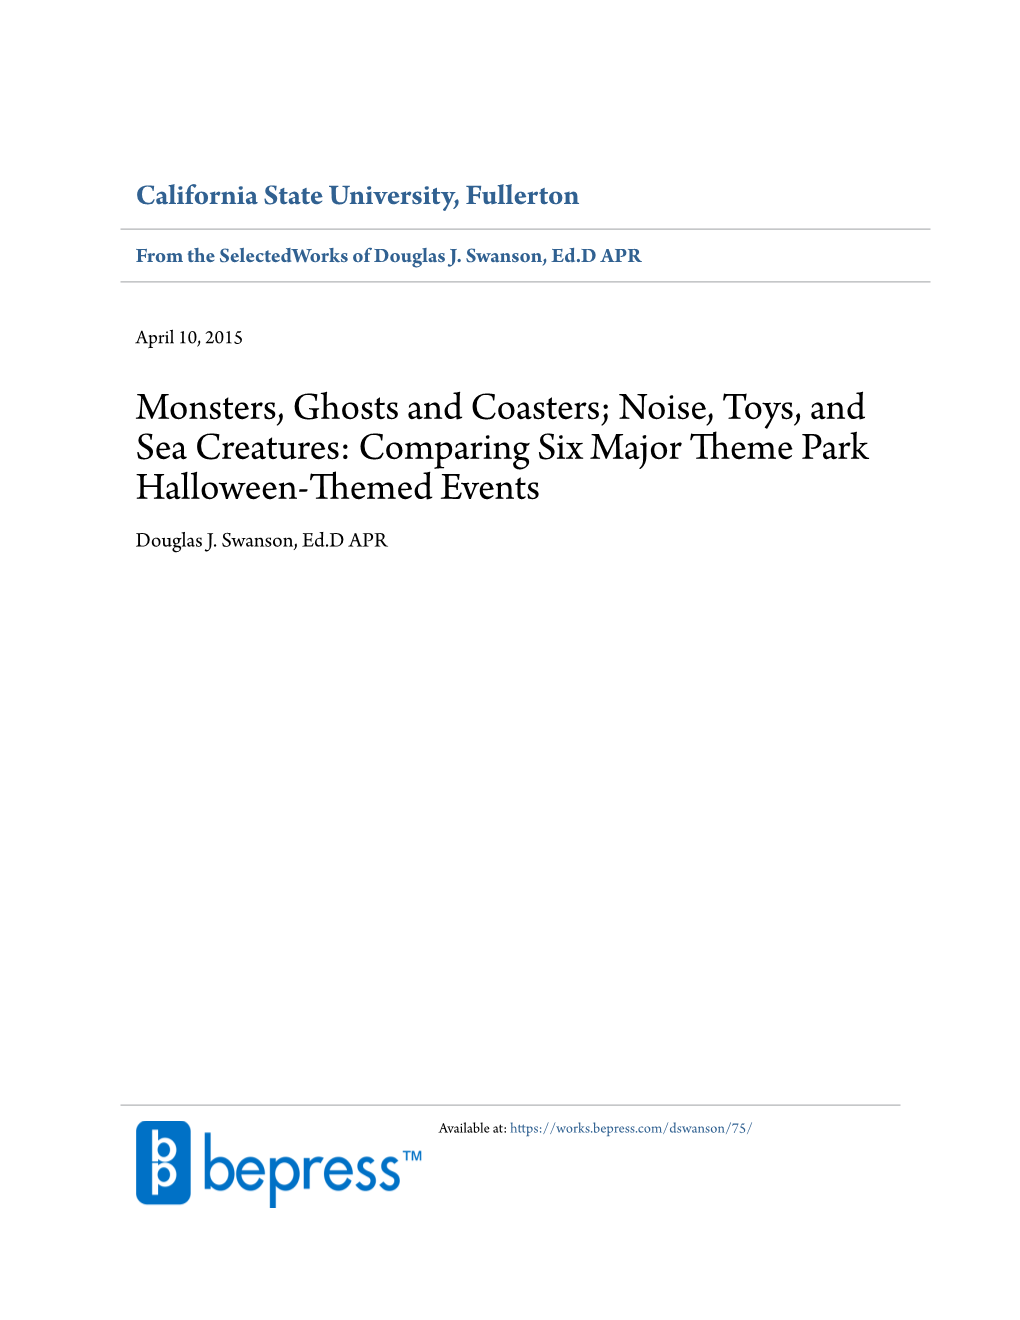 Comparing Six Major Theme Park Halloween-Themed Events Douglas J